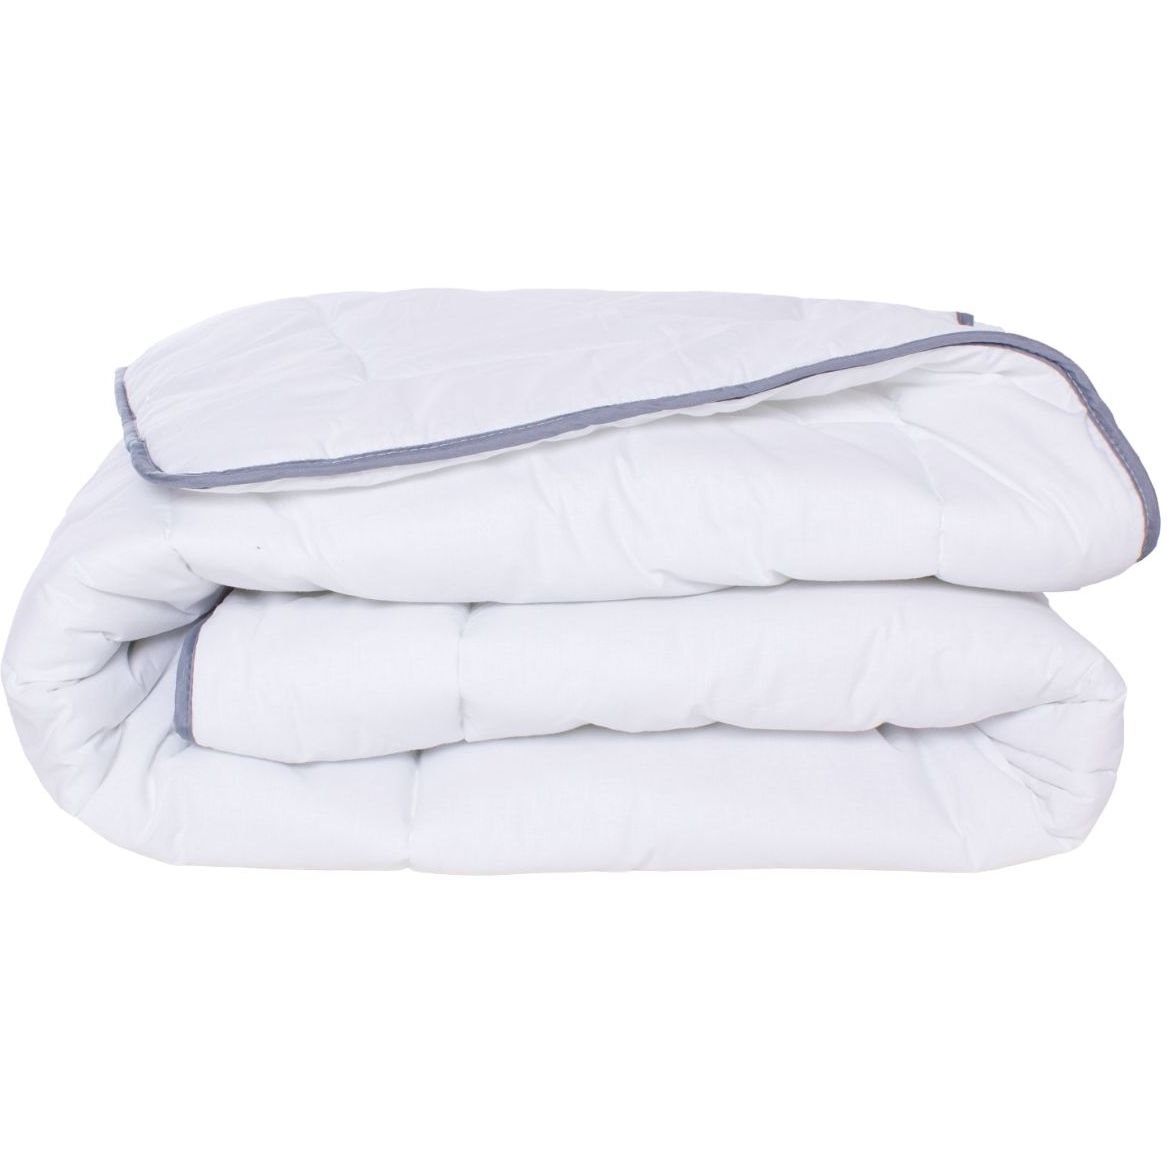 Одеяло шерстяное MirSon Royal №027, зимнее, 200x220 см, белое - фото 1